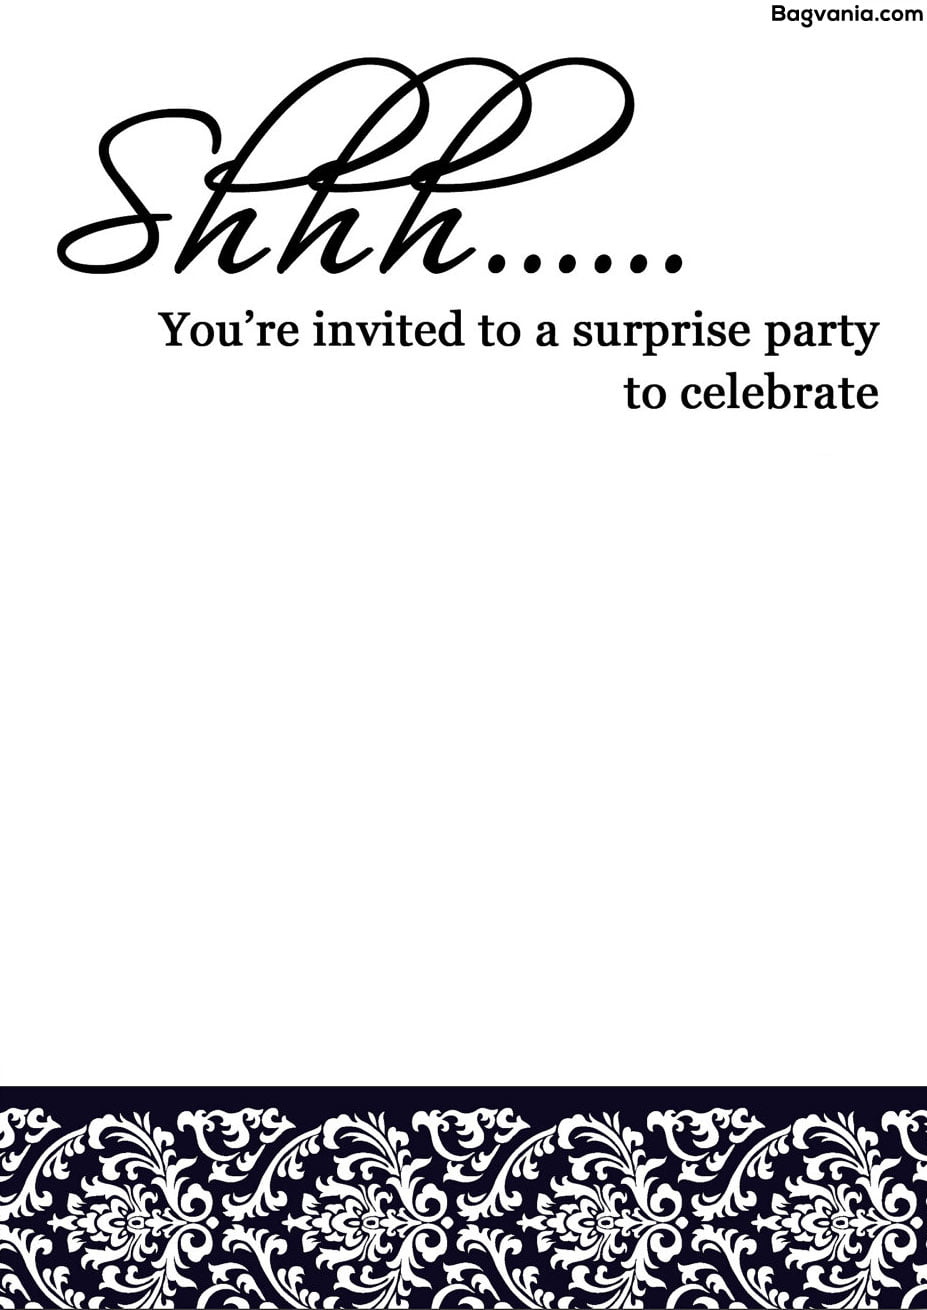 free-printable-surprise-birthday-invitations-bagvania-free-printable-invitation-template